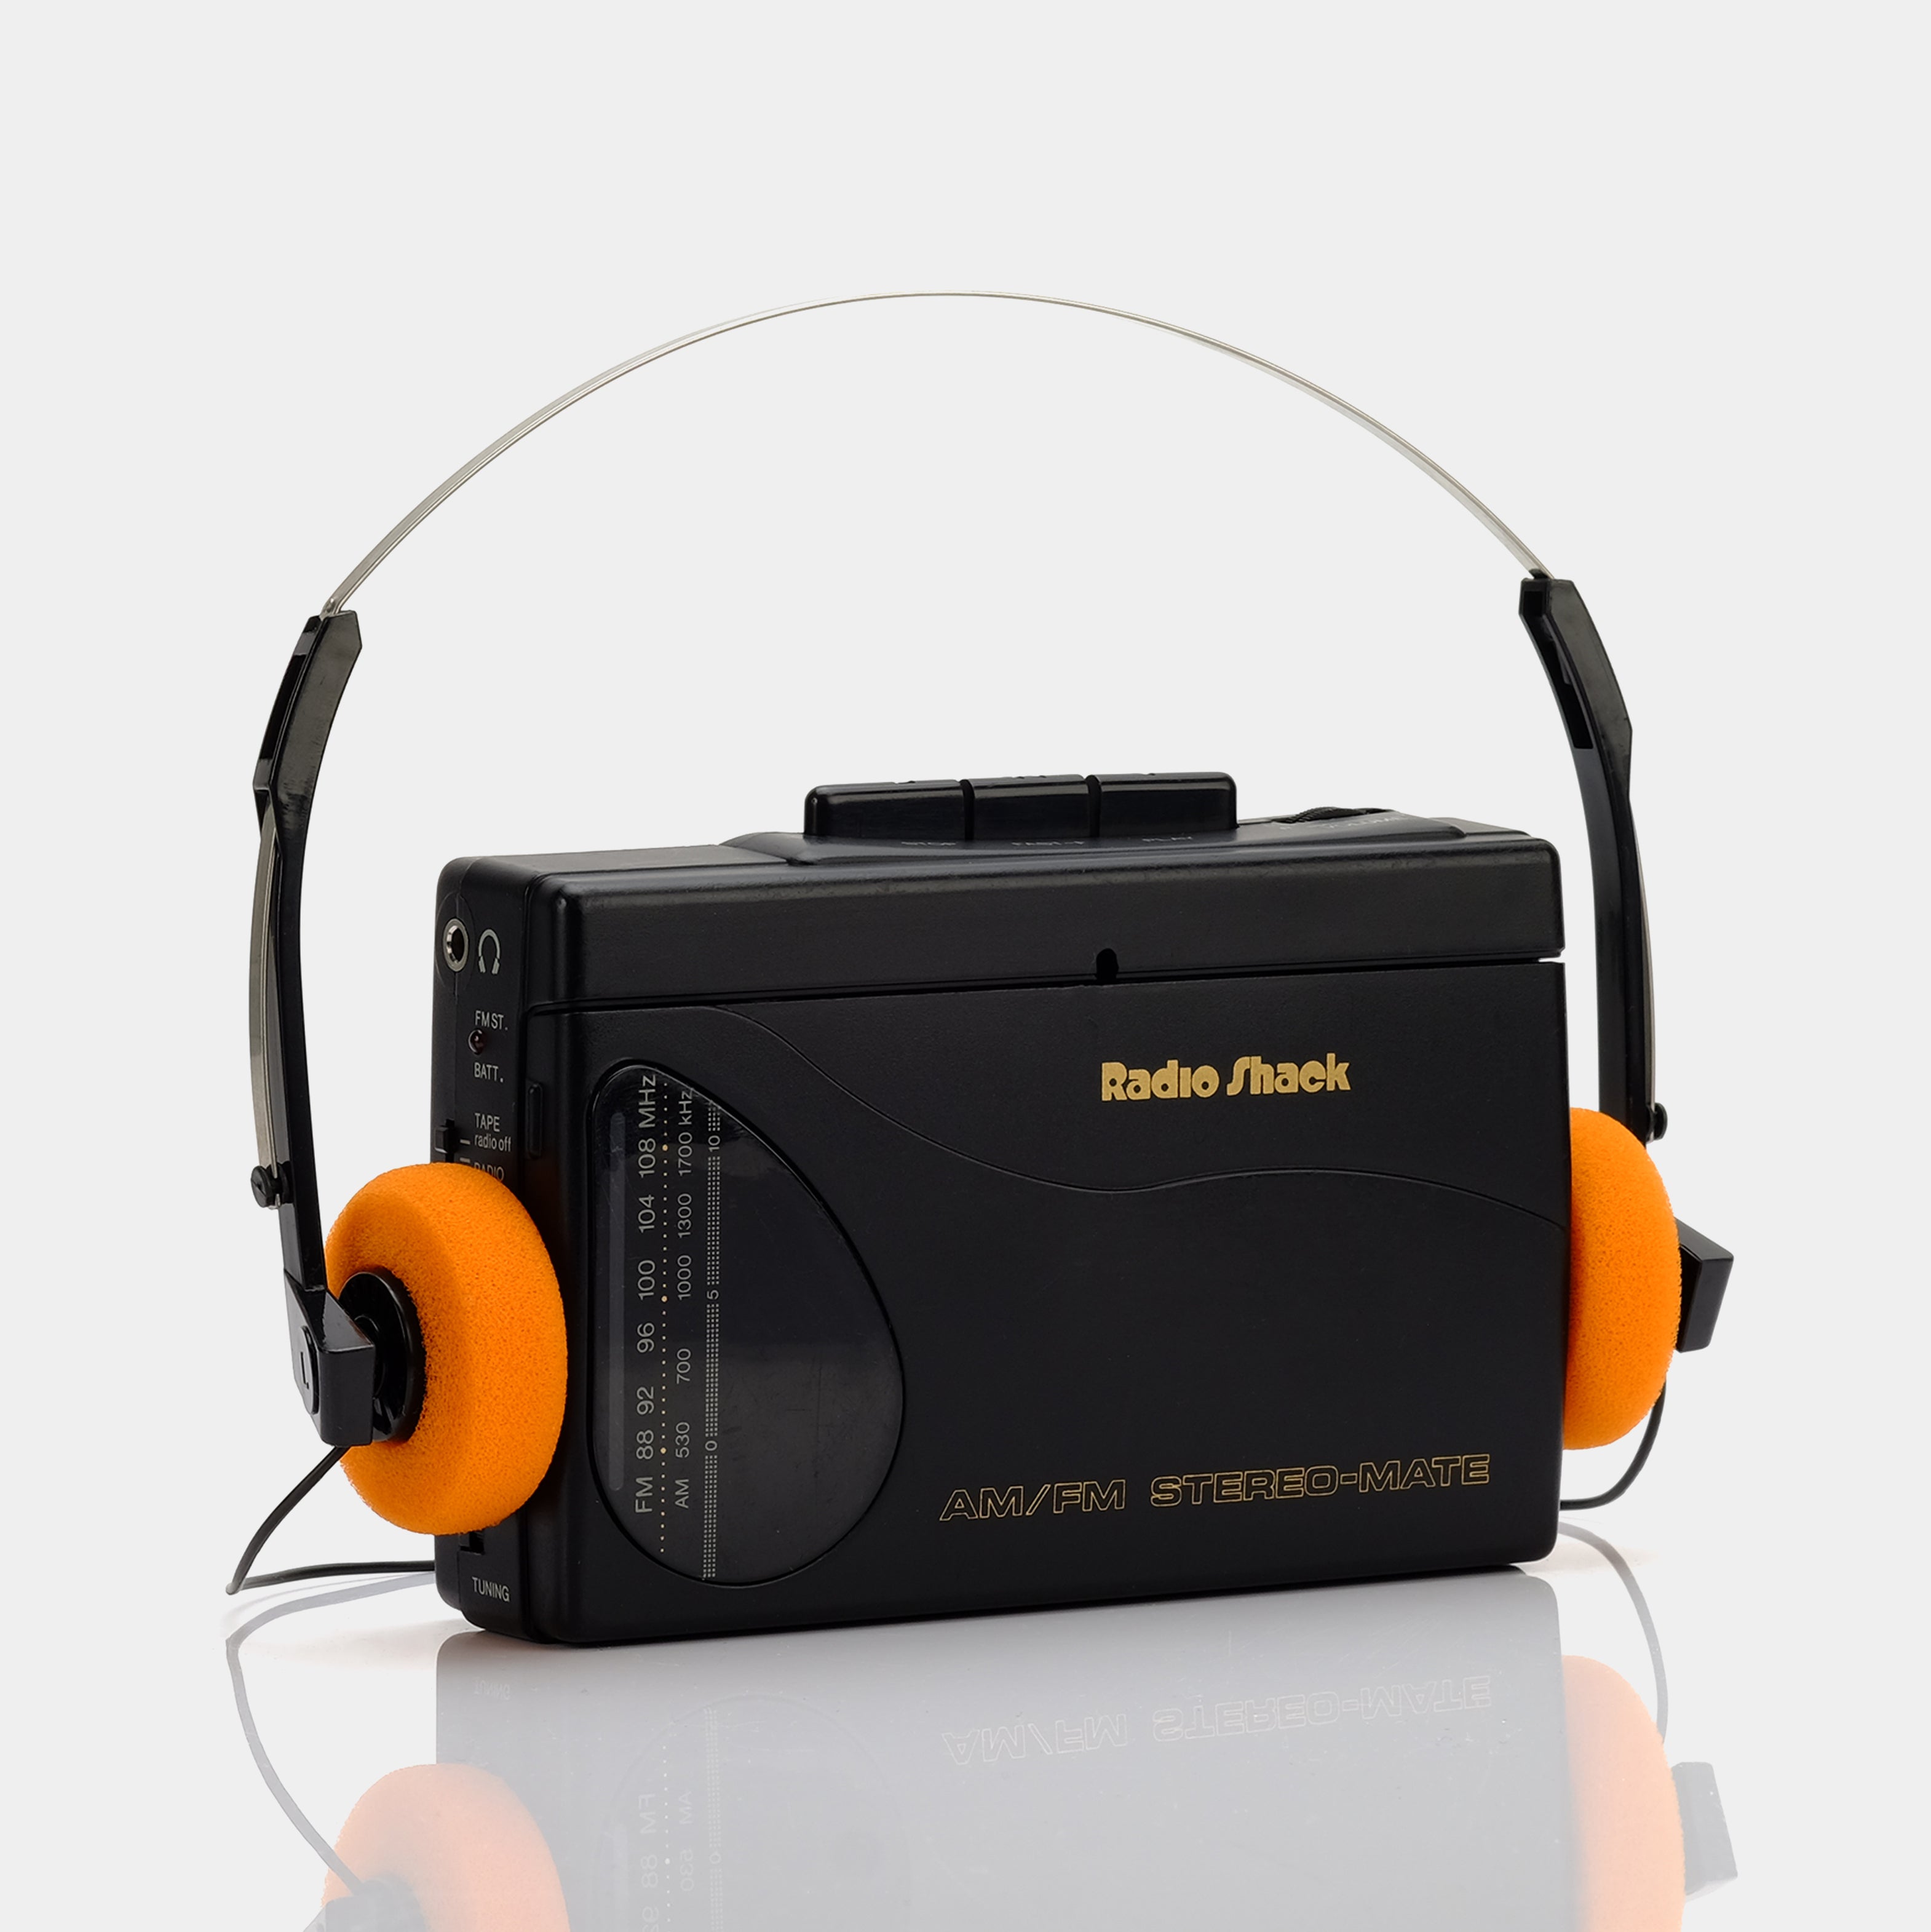 Radio Shack Stereo-Mate AM/FM Portable Cassette Player